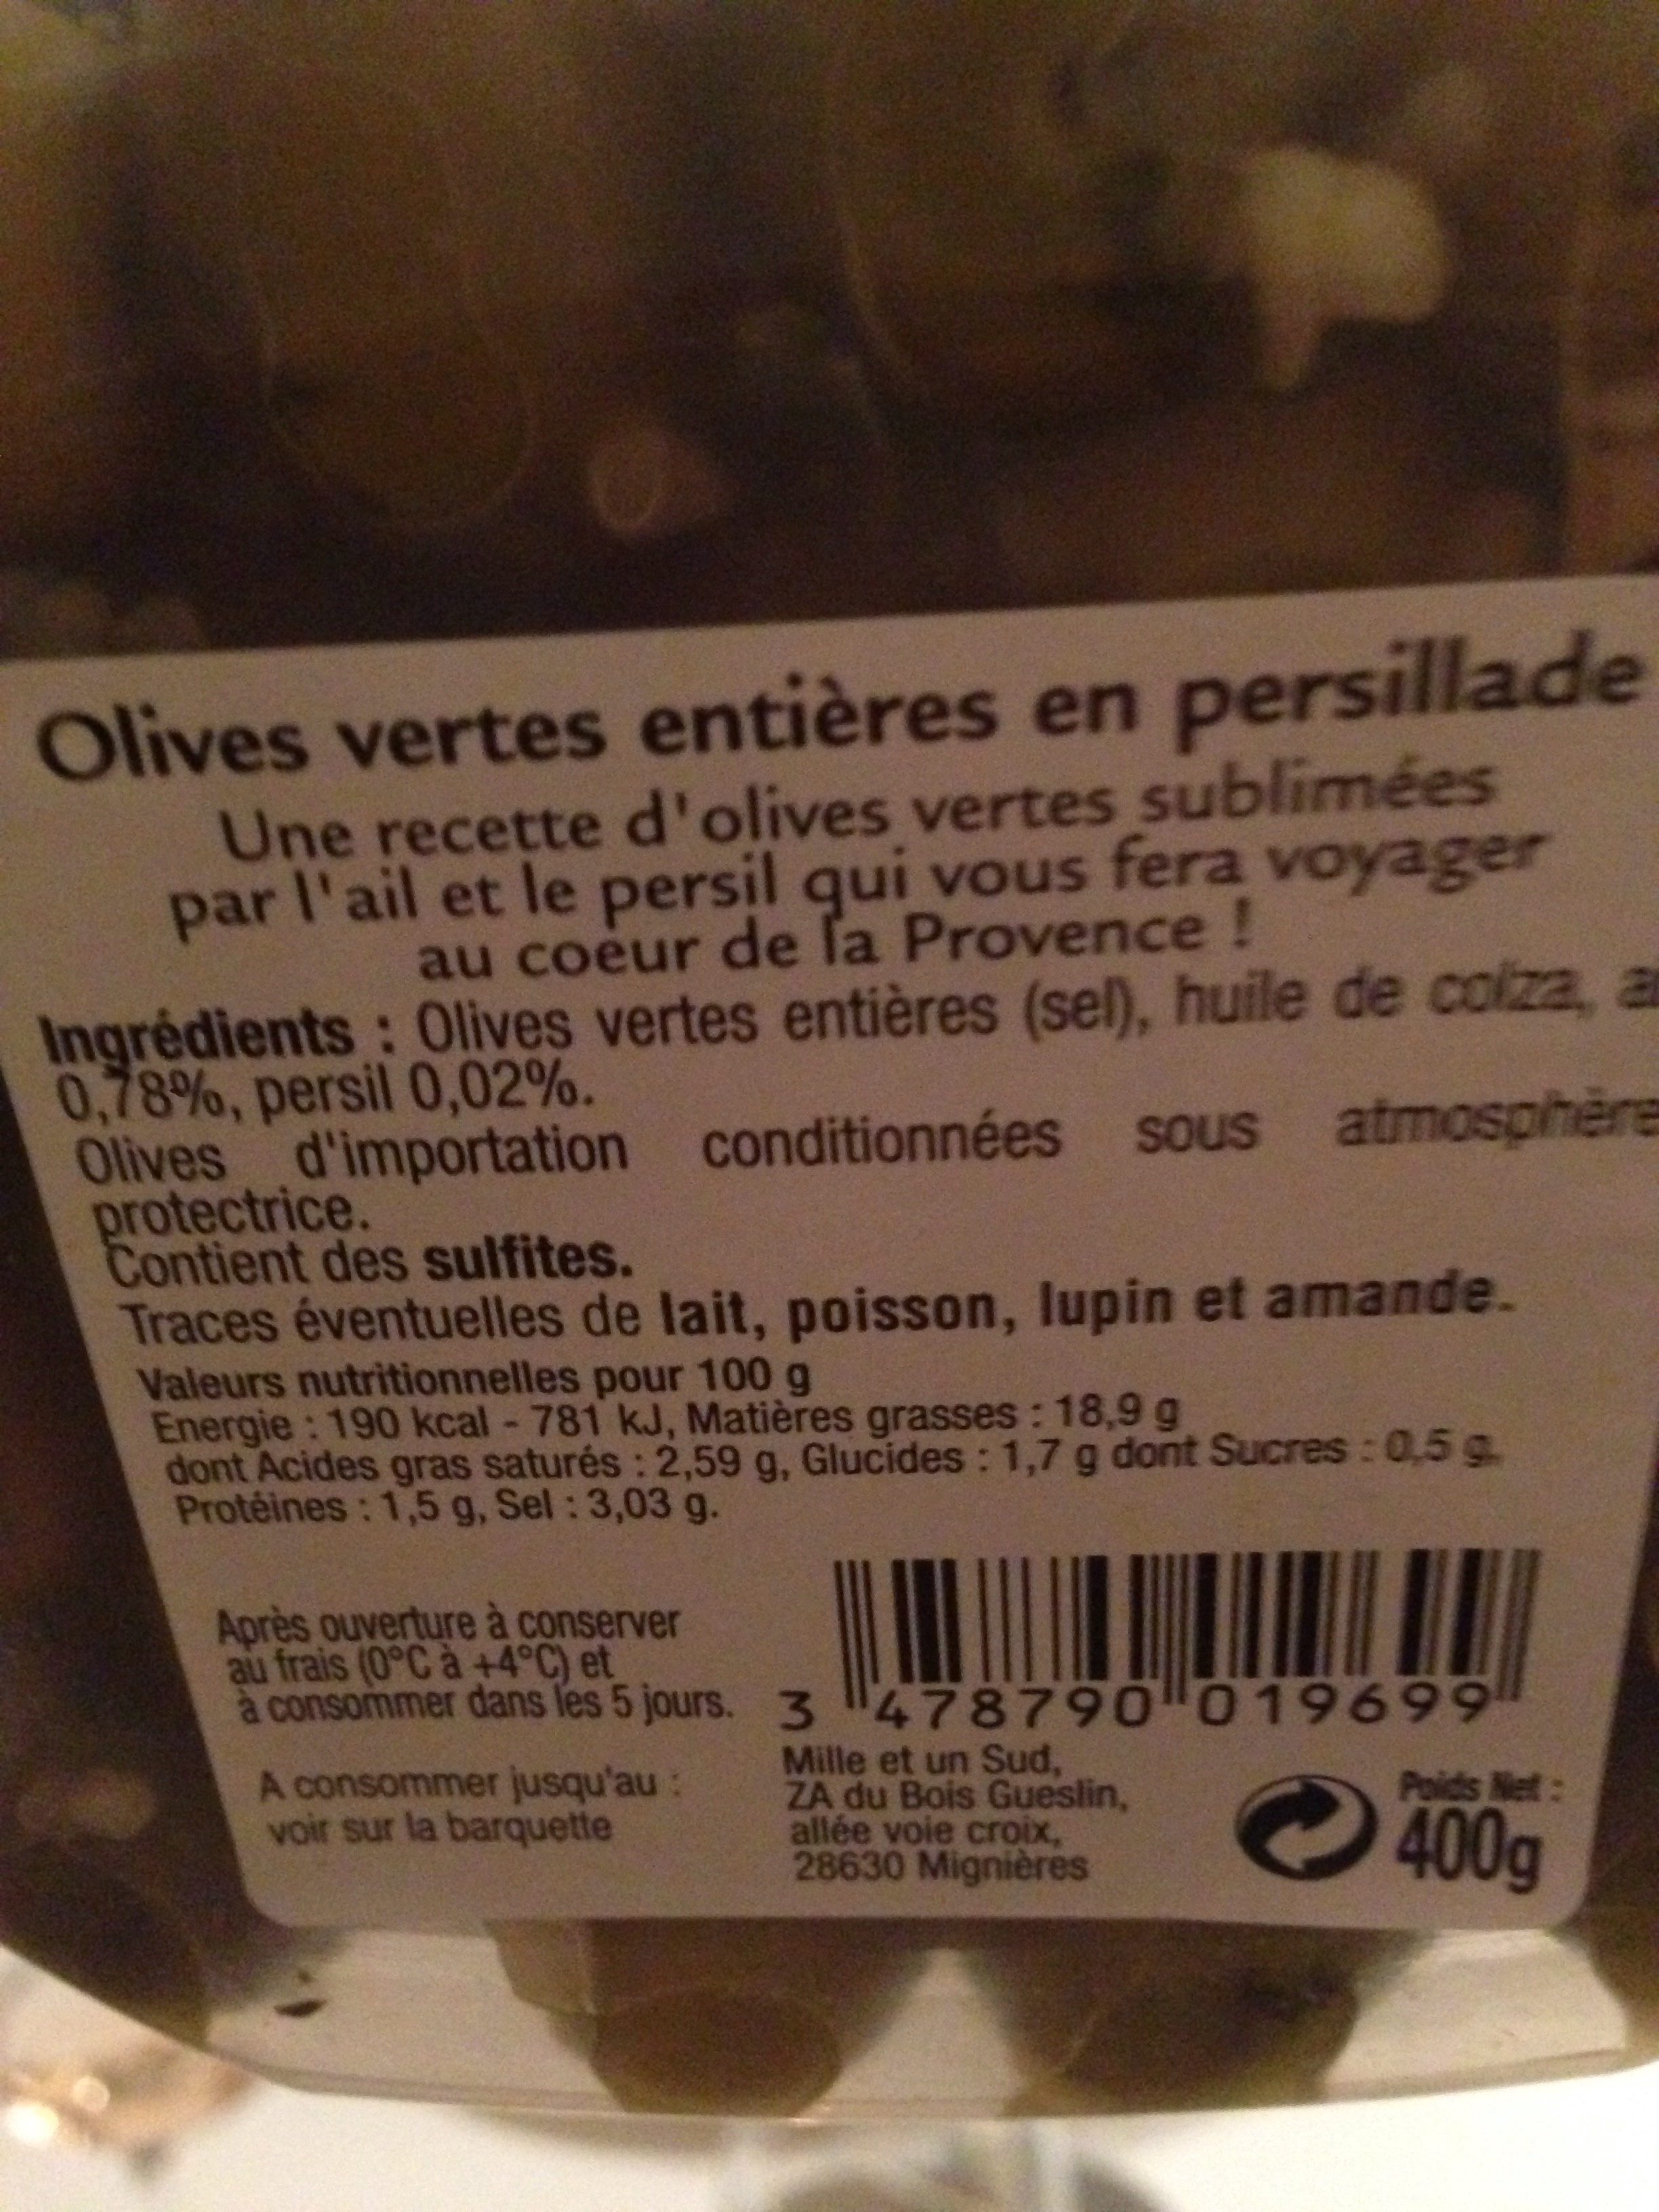 Olives en Persillade entières et douces ail et persil - Ingredients - fr